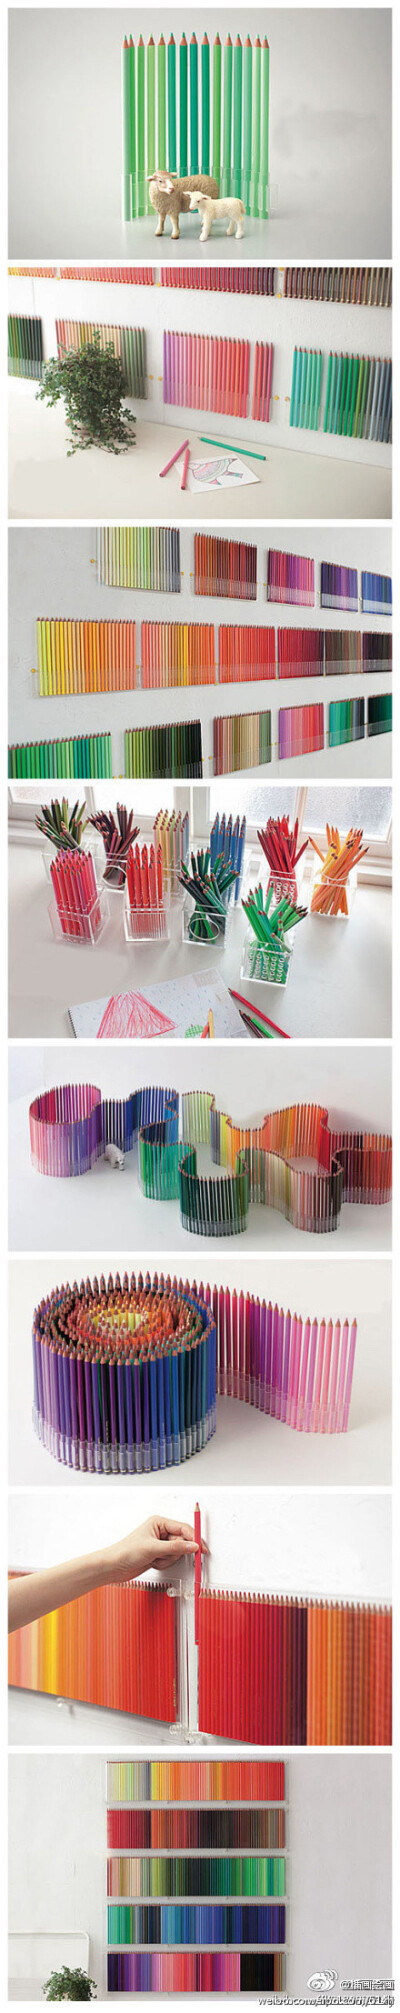 FELISSIMO (芬理希梦)出品的500色铅笔 (500 Colored Pencils)